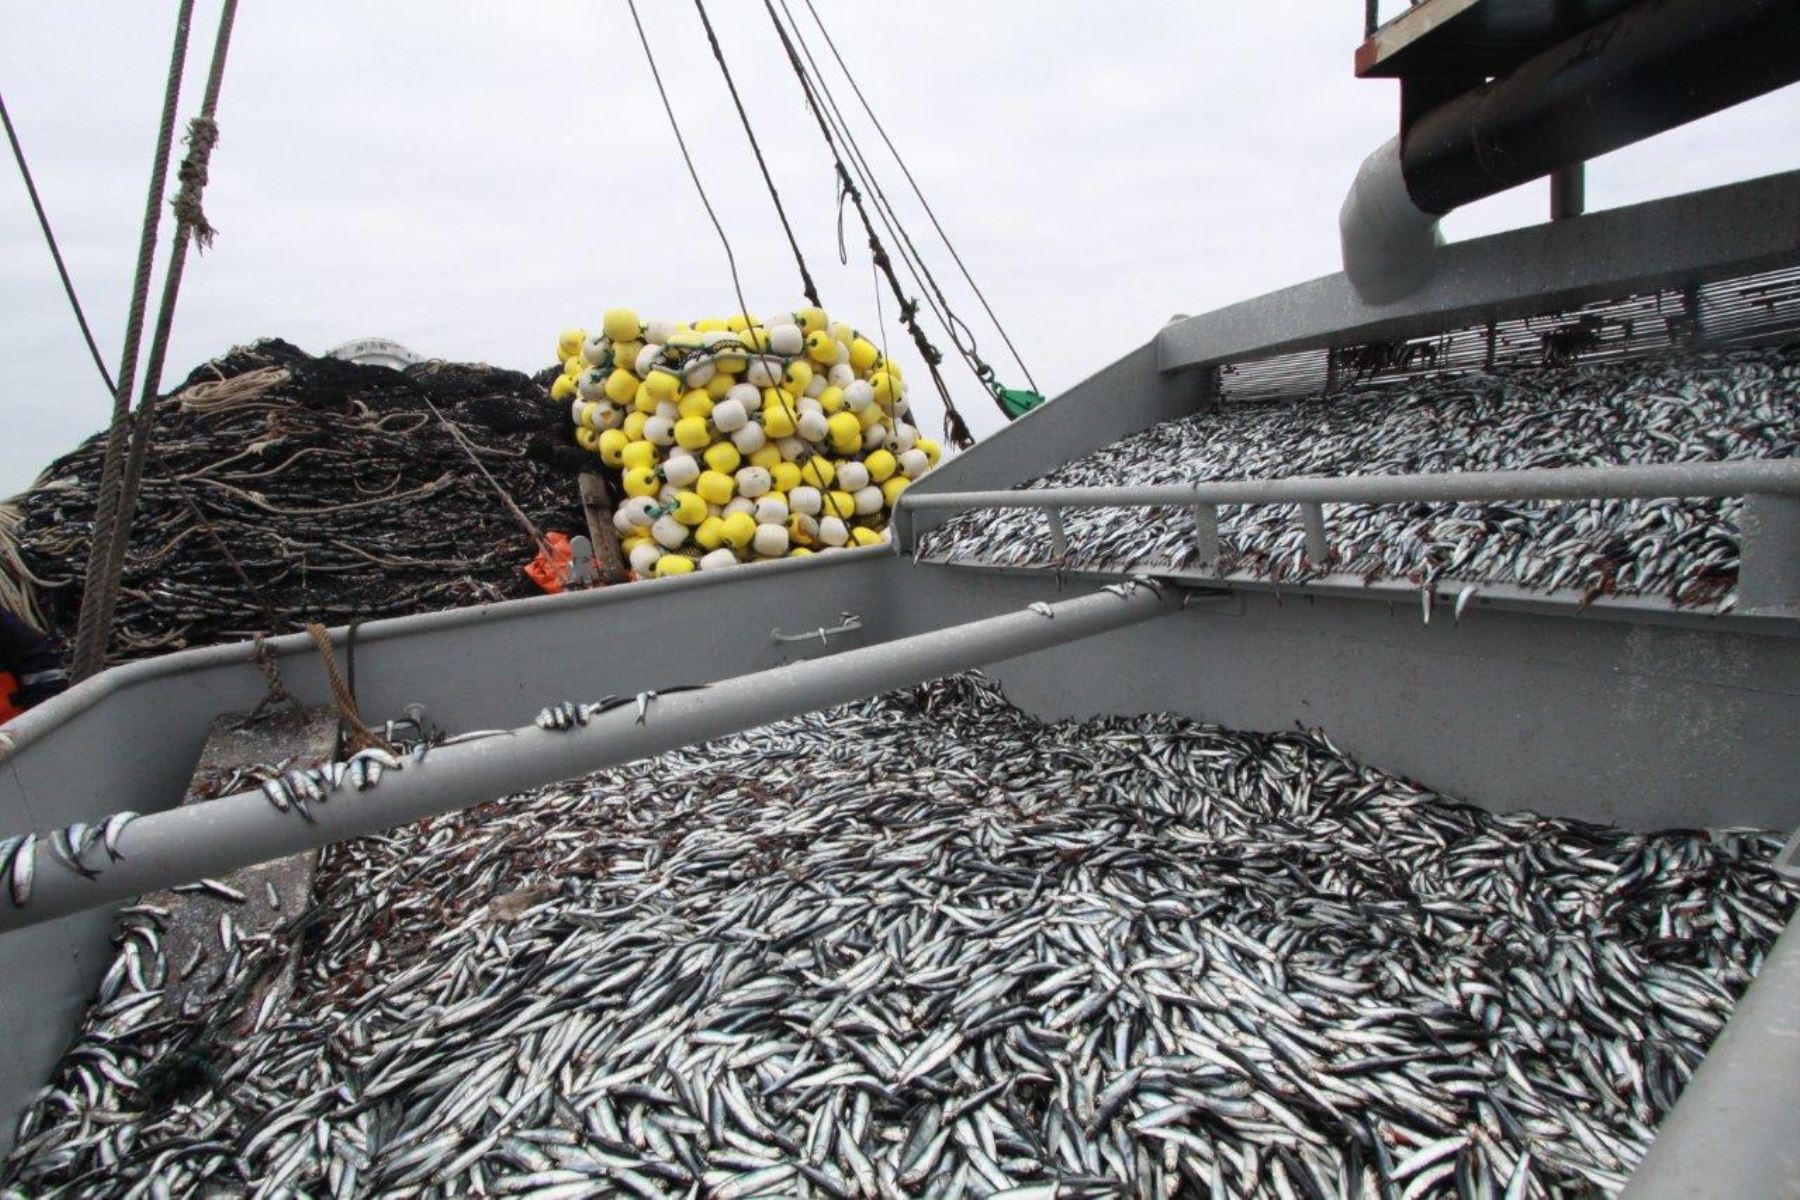 Cuota de anchoveta en segunda temporada será de 2.1 millones de toneladas